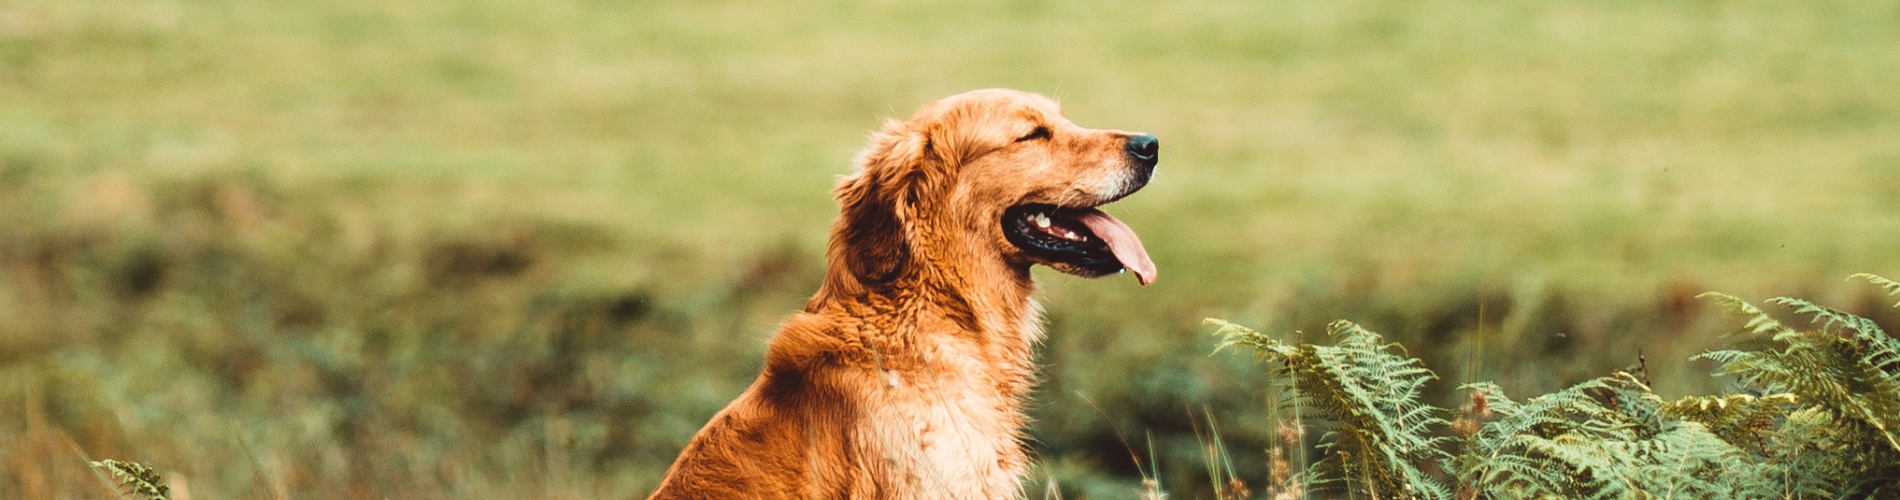 A happy dog sitting in a field